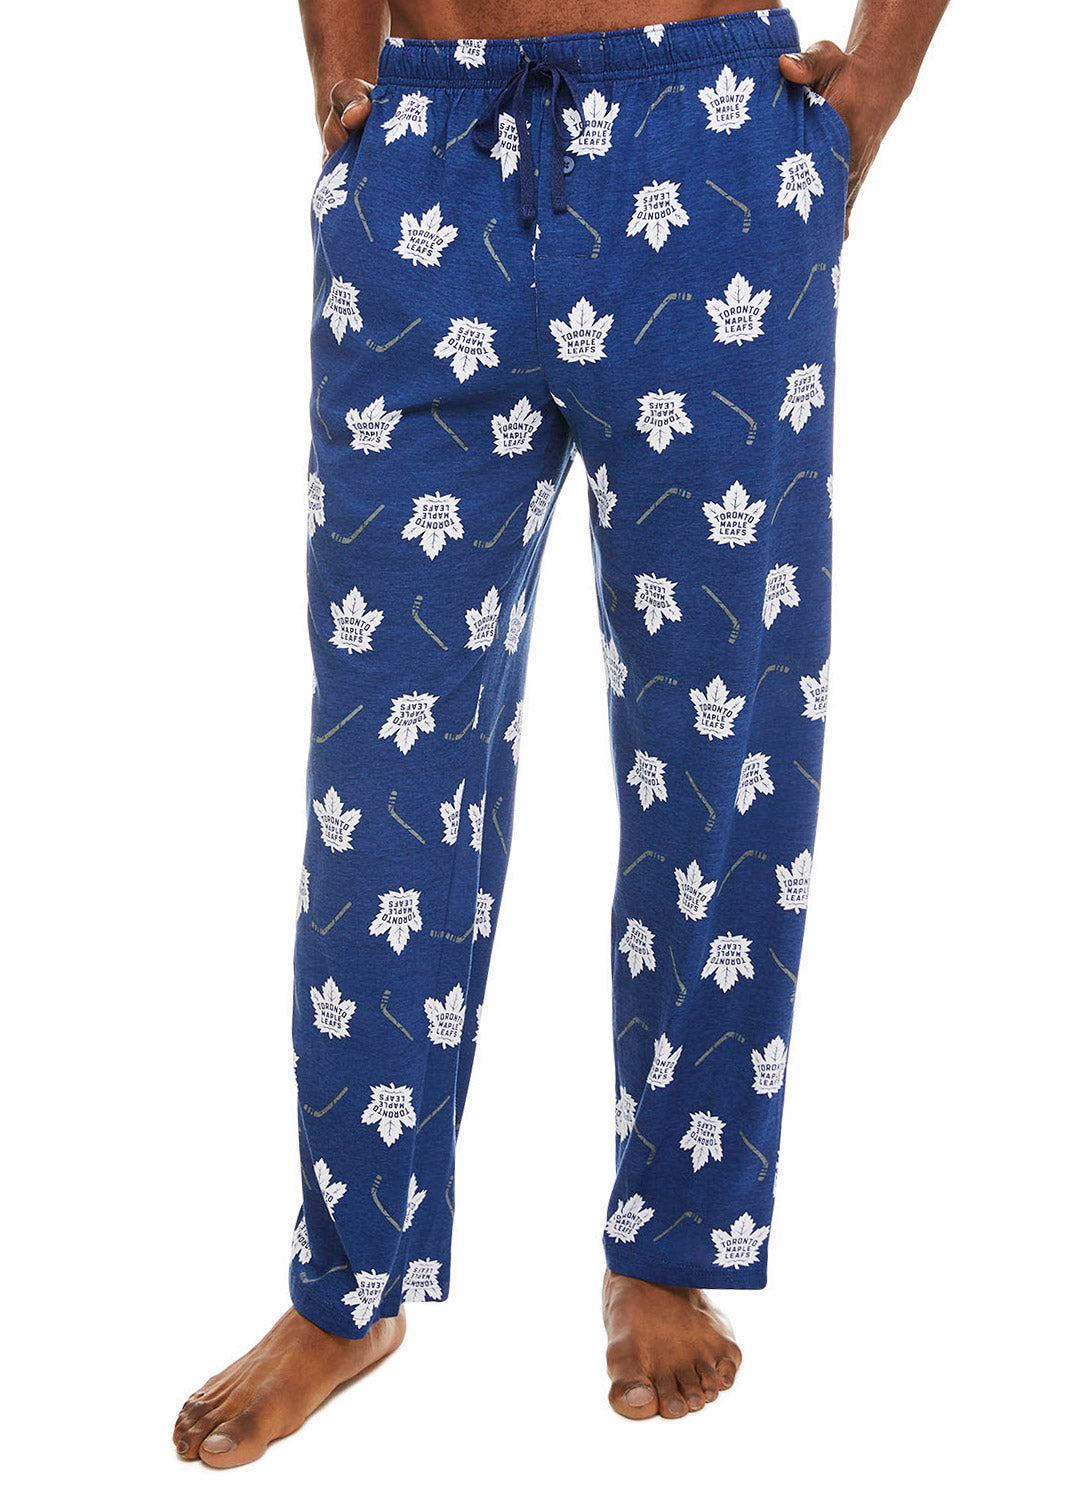 Toronto Maple Leafs Pajamas, Sweatpants & Loungewear in Toronto